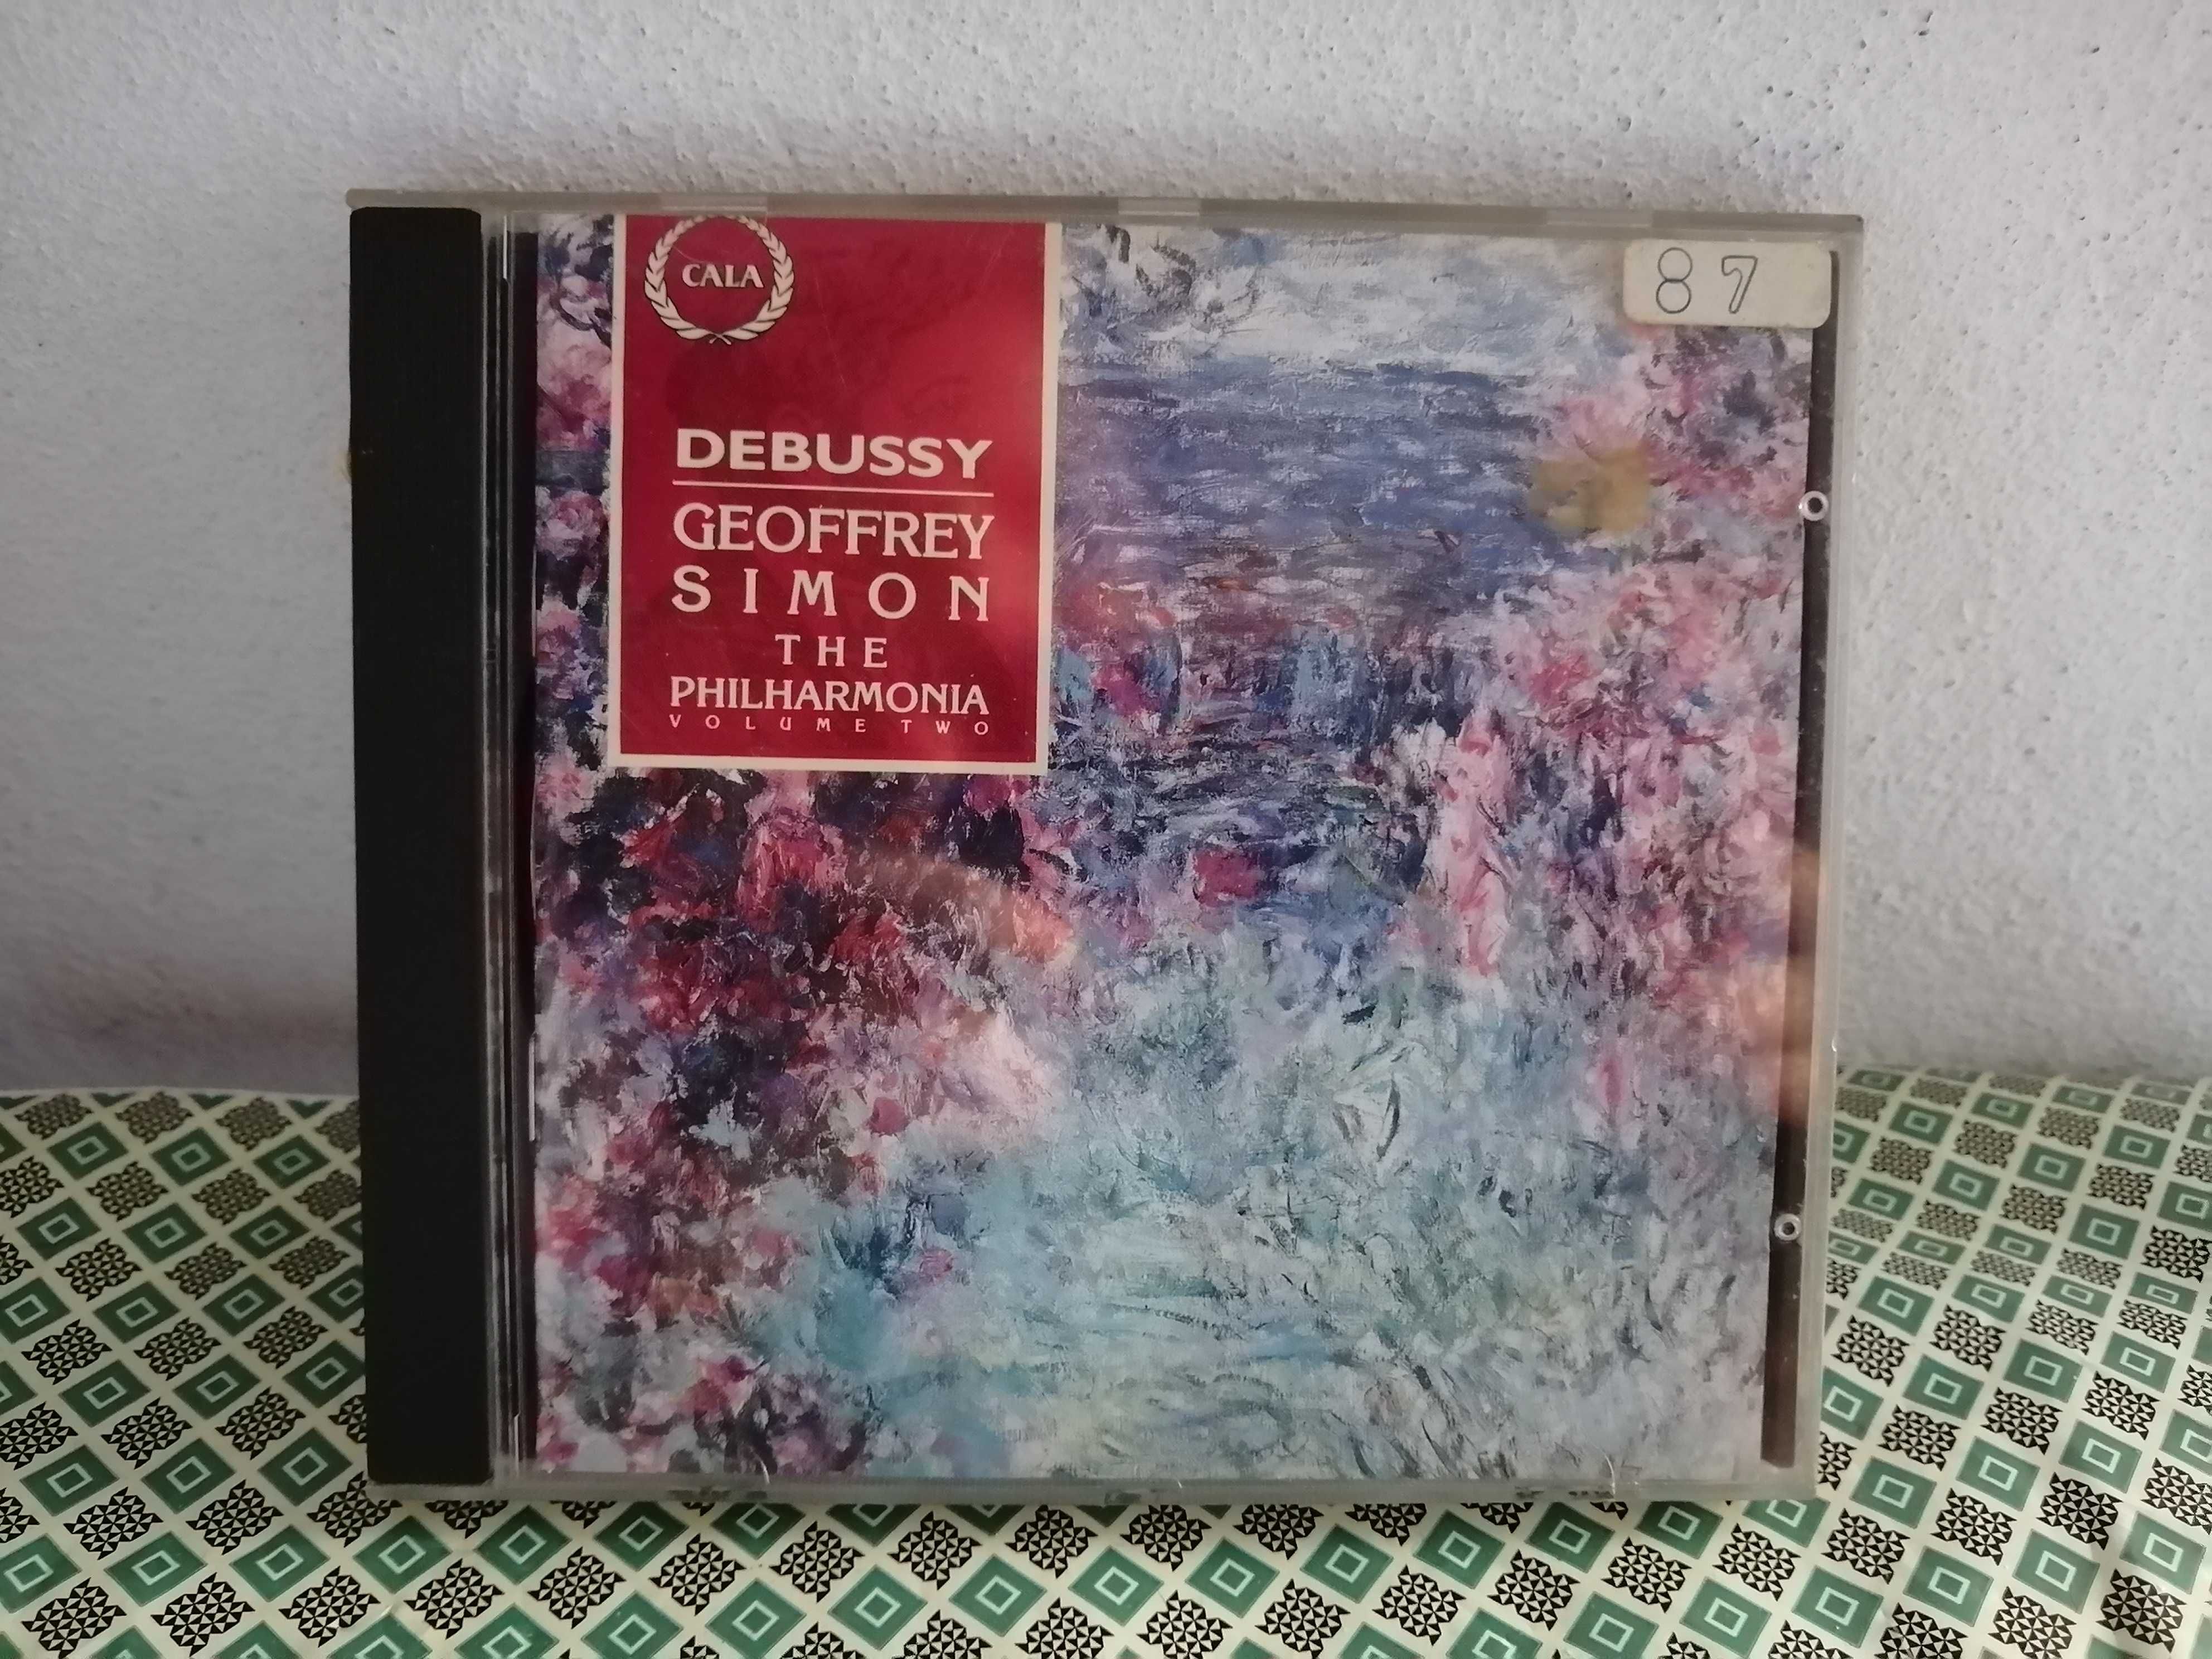 CD Debussy Geoffrey Simon